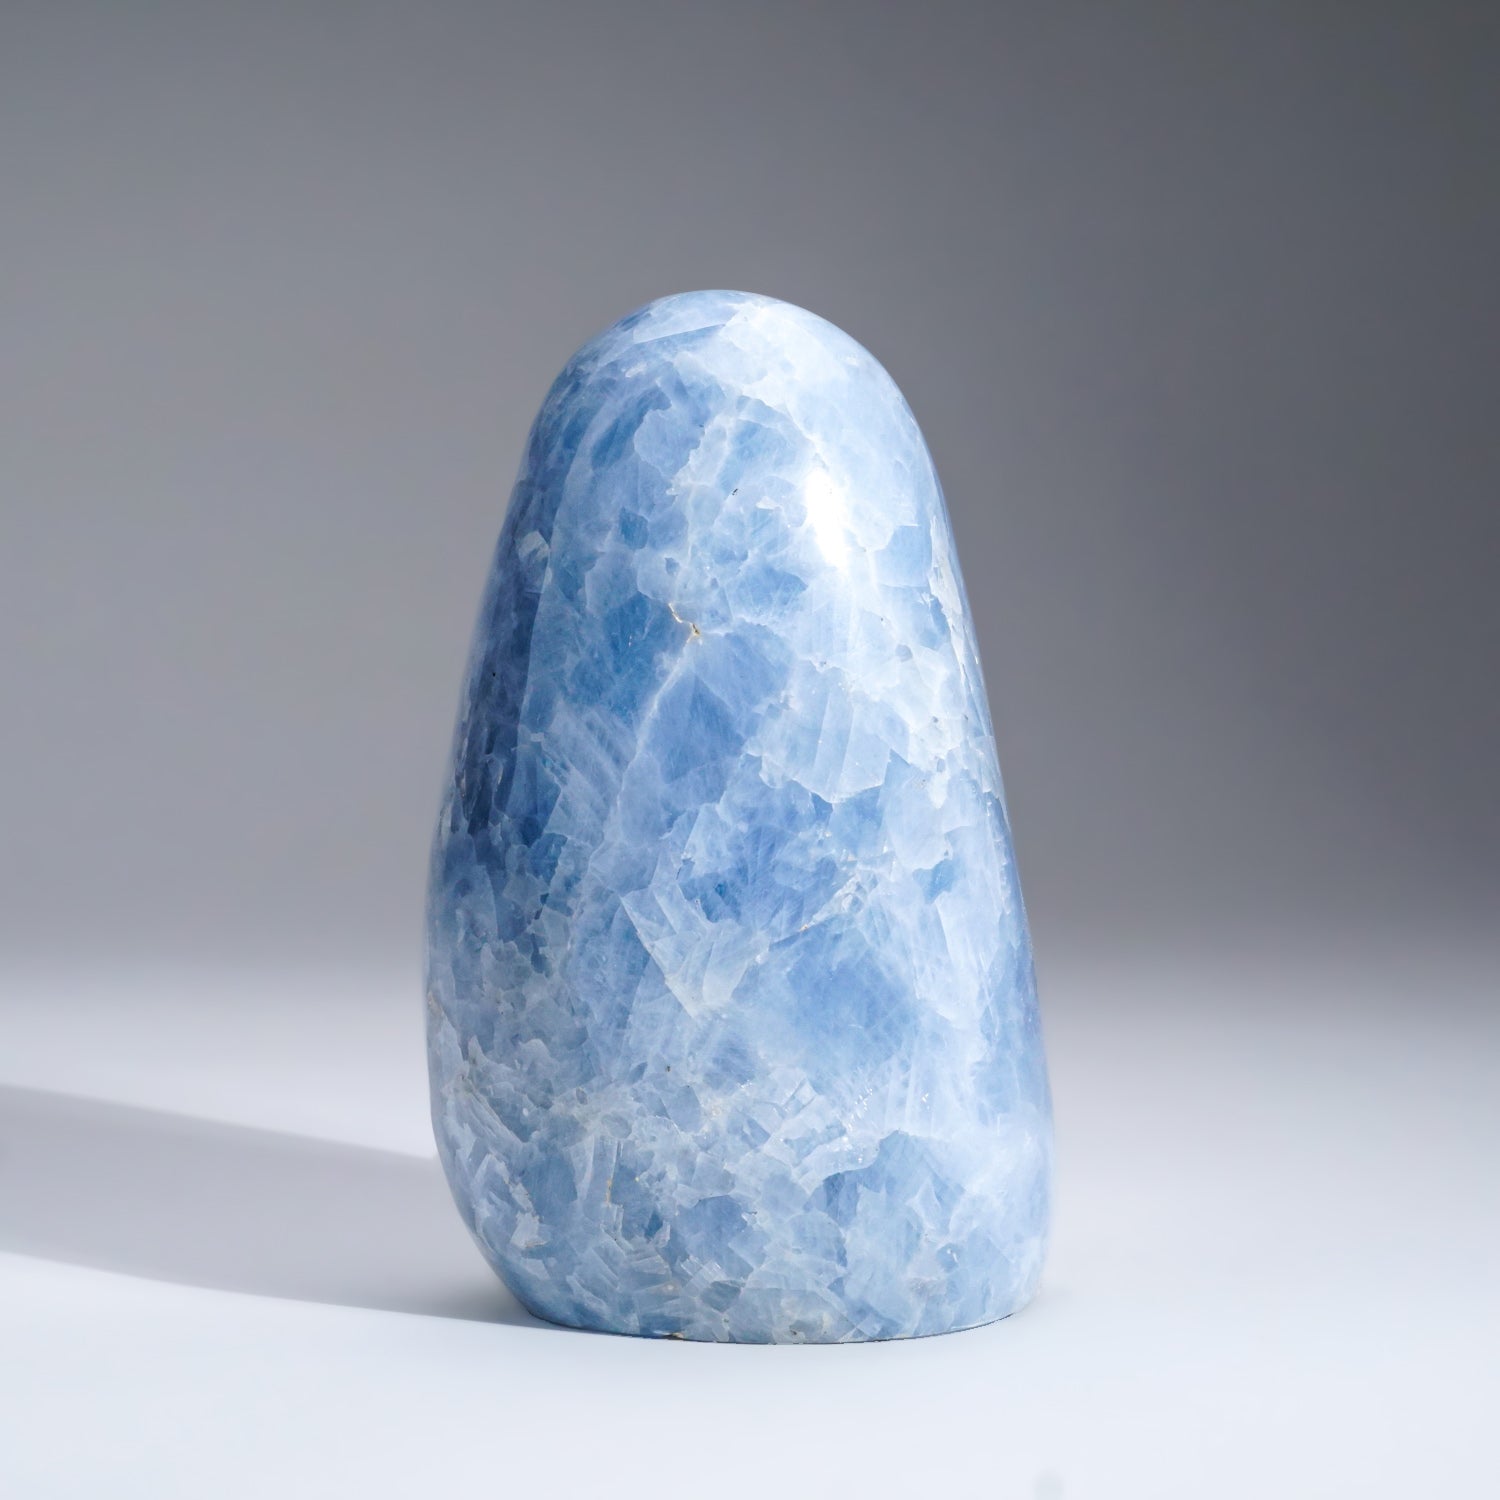 Genuine Blue Calcite Freeform from Mexico (4.5 lbs)